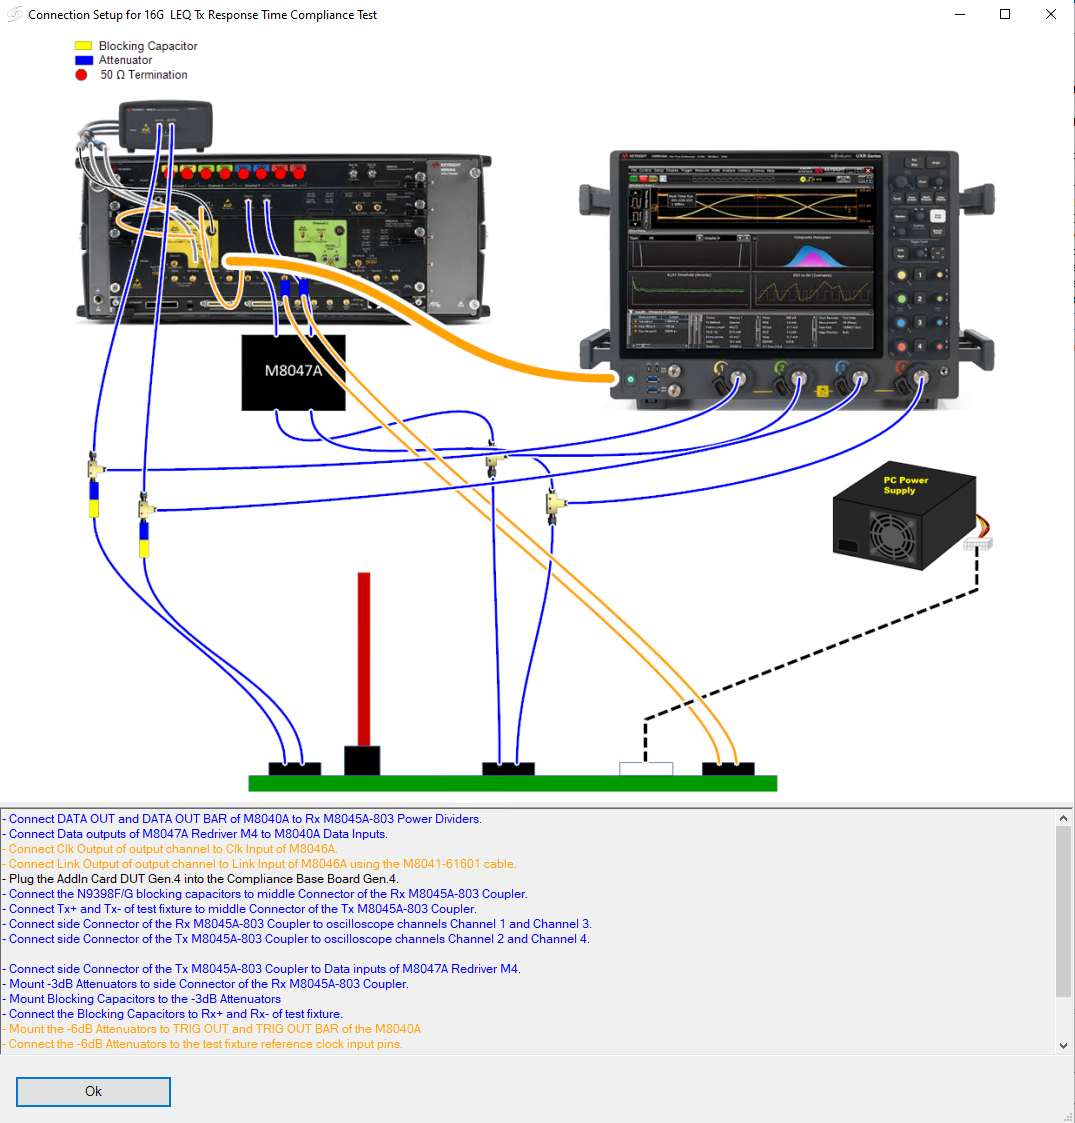 N5991PC4A 16G AIC linkEQ response time test connection diagram